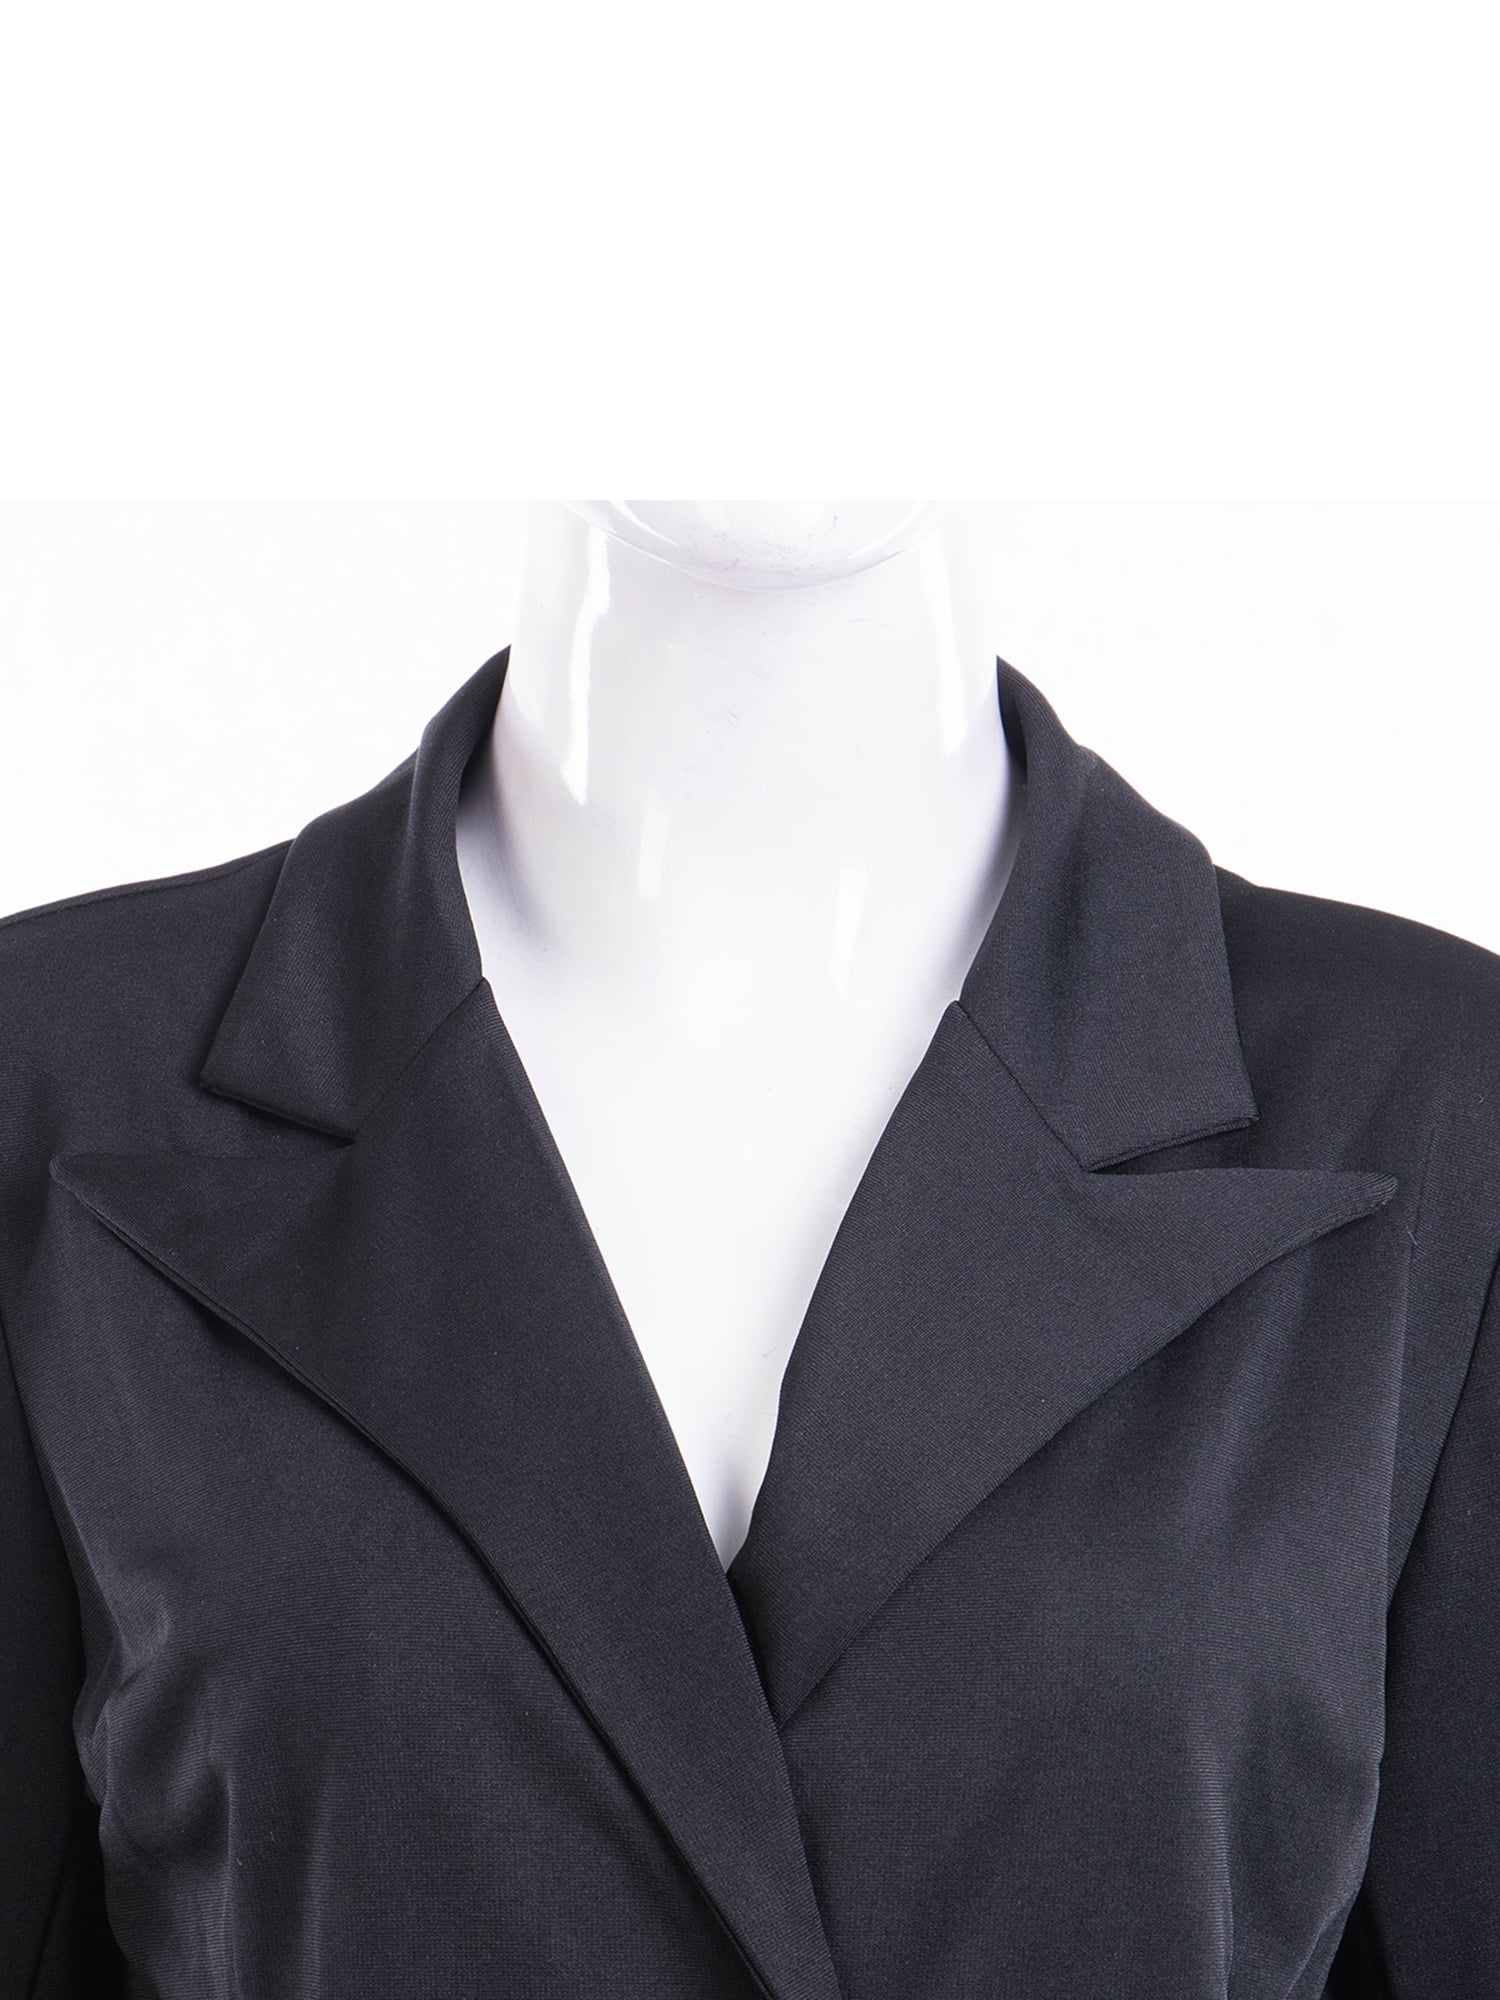 EYIIYE Women Casual Long Sleeve Coat Slim Blazer Jacket Outwear 